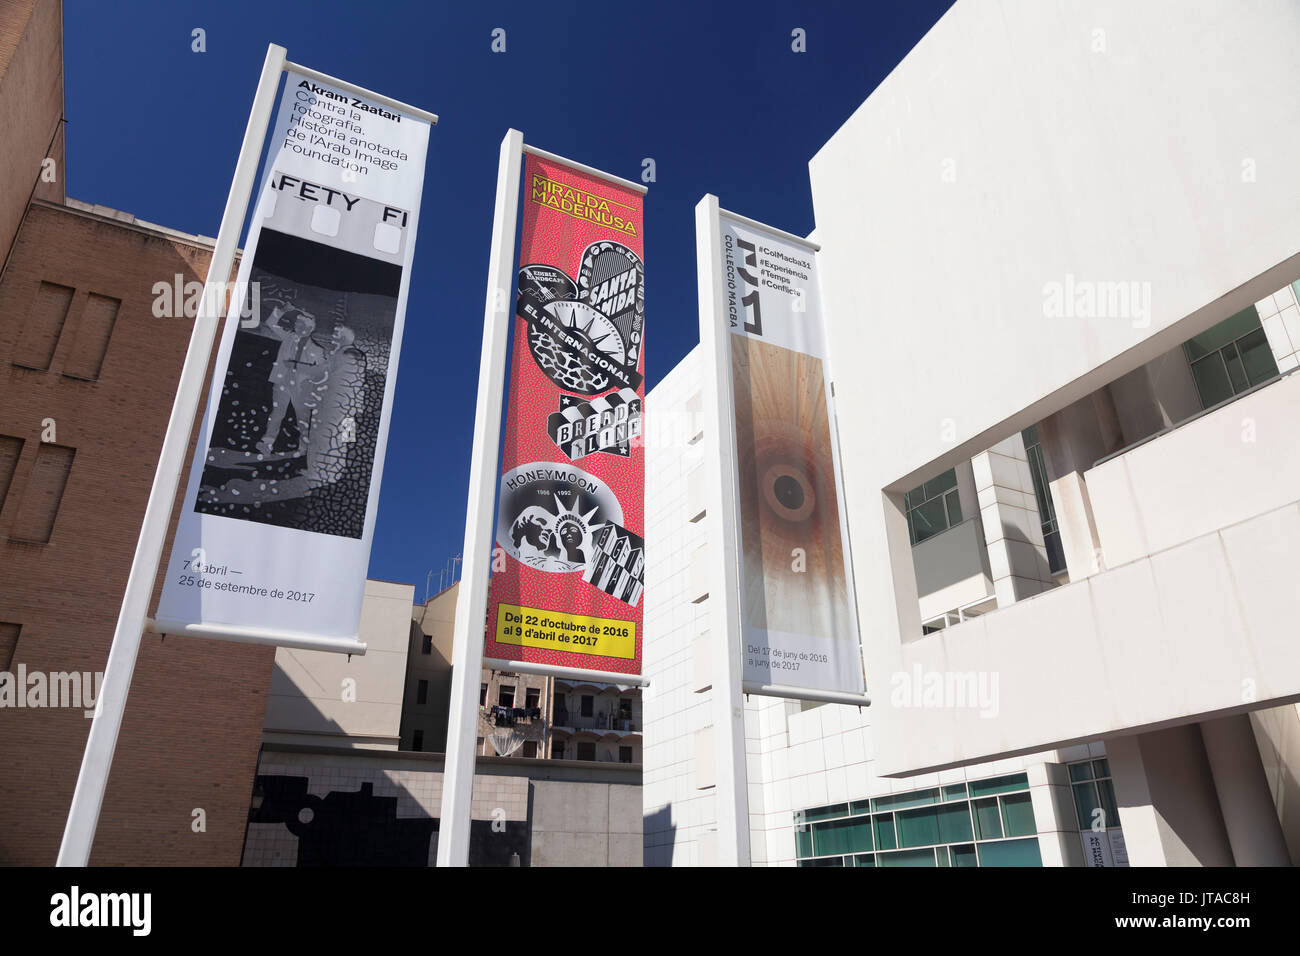 Museu d'Art Contemporani de Barcelona (MACBA), architect Richard Meier, El Raval, Barcelona, Catalonia, Spain, Europe Stock Photo